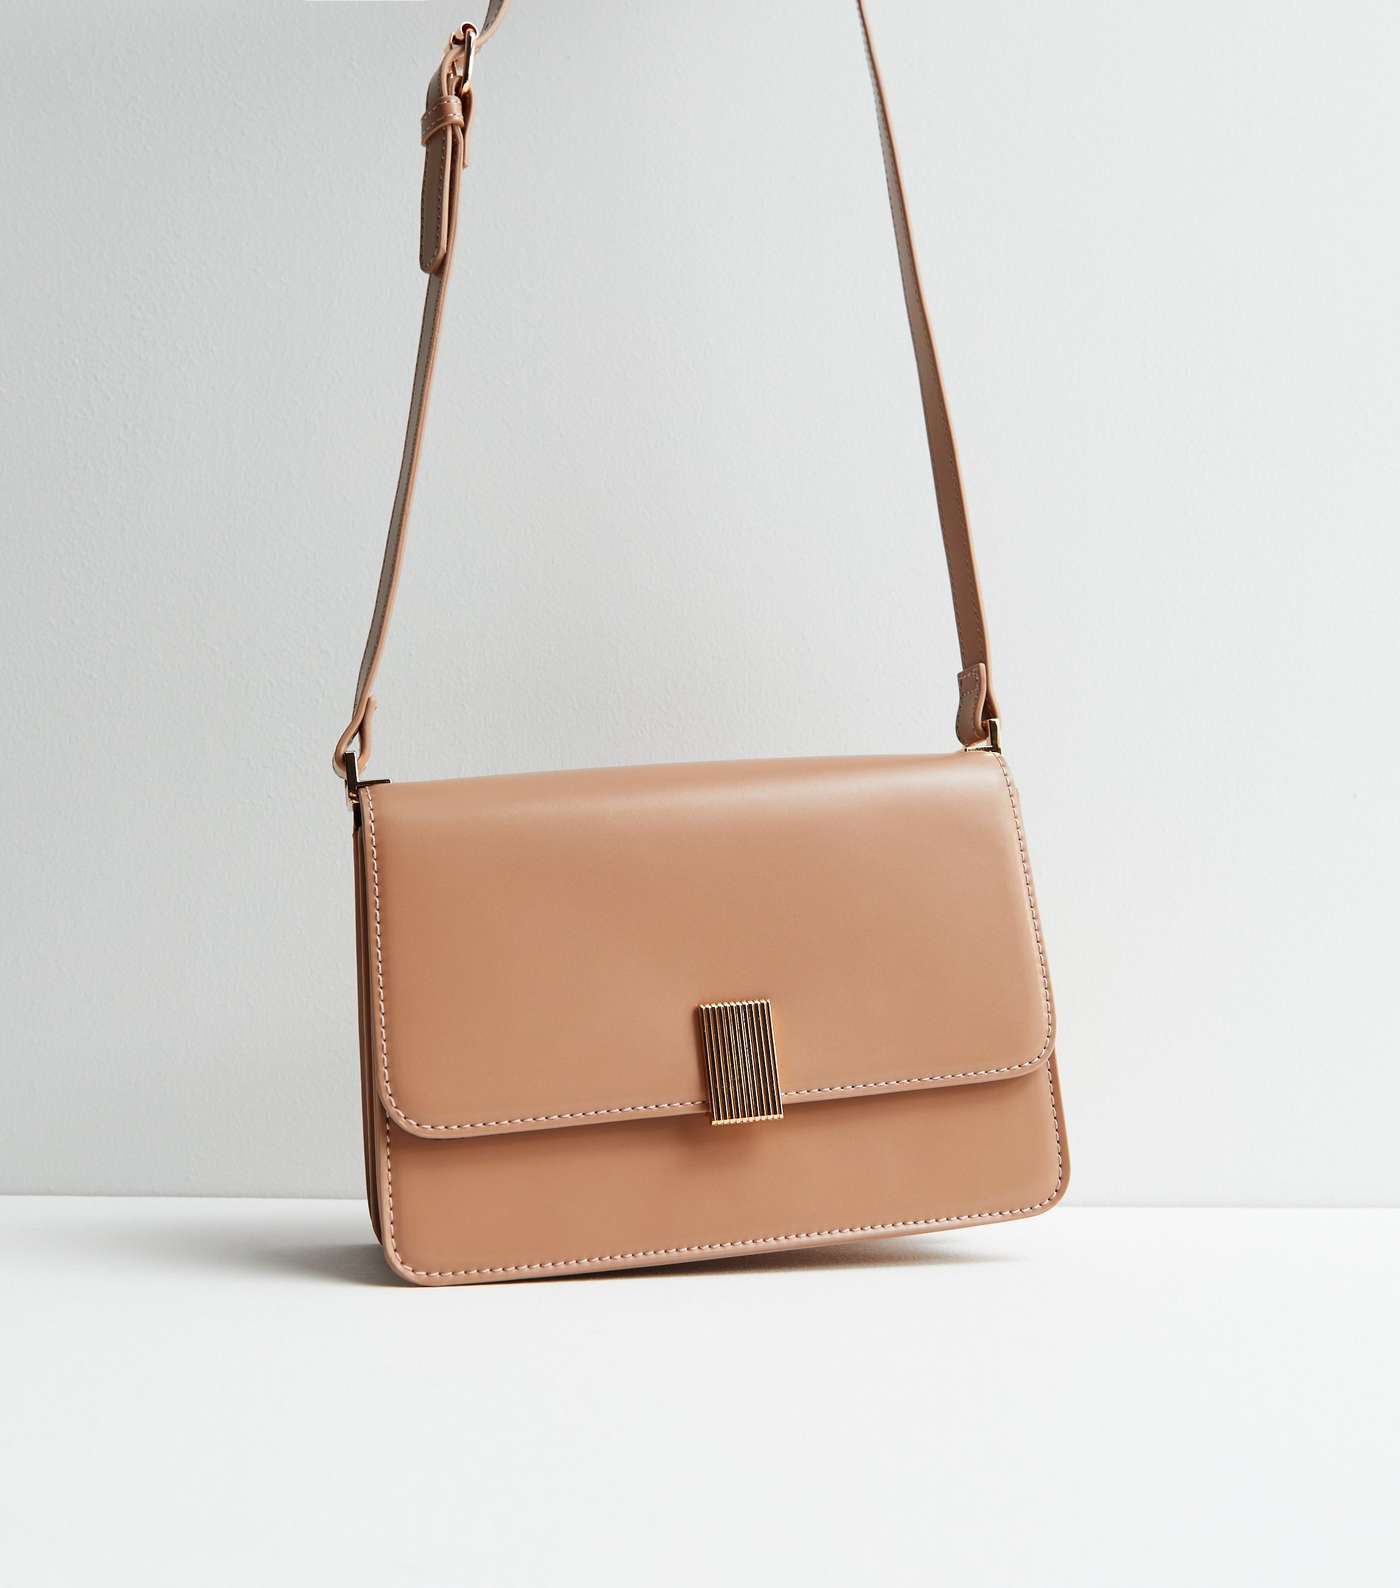 Mink Leather-Look Cross Body Bag